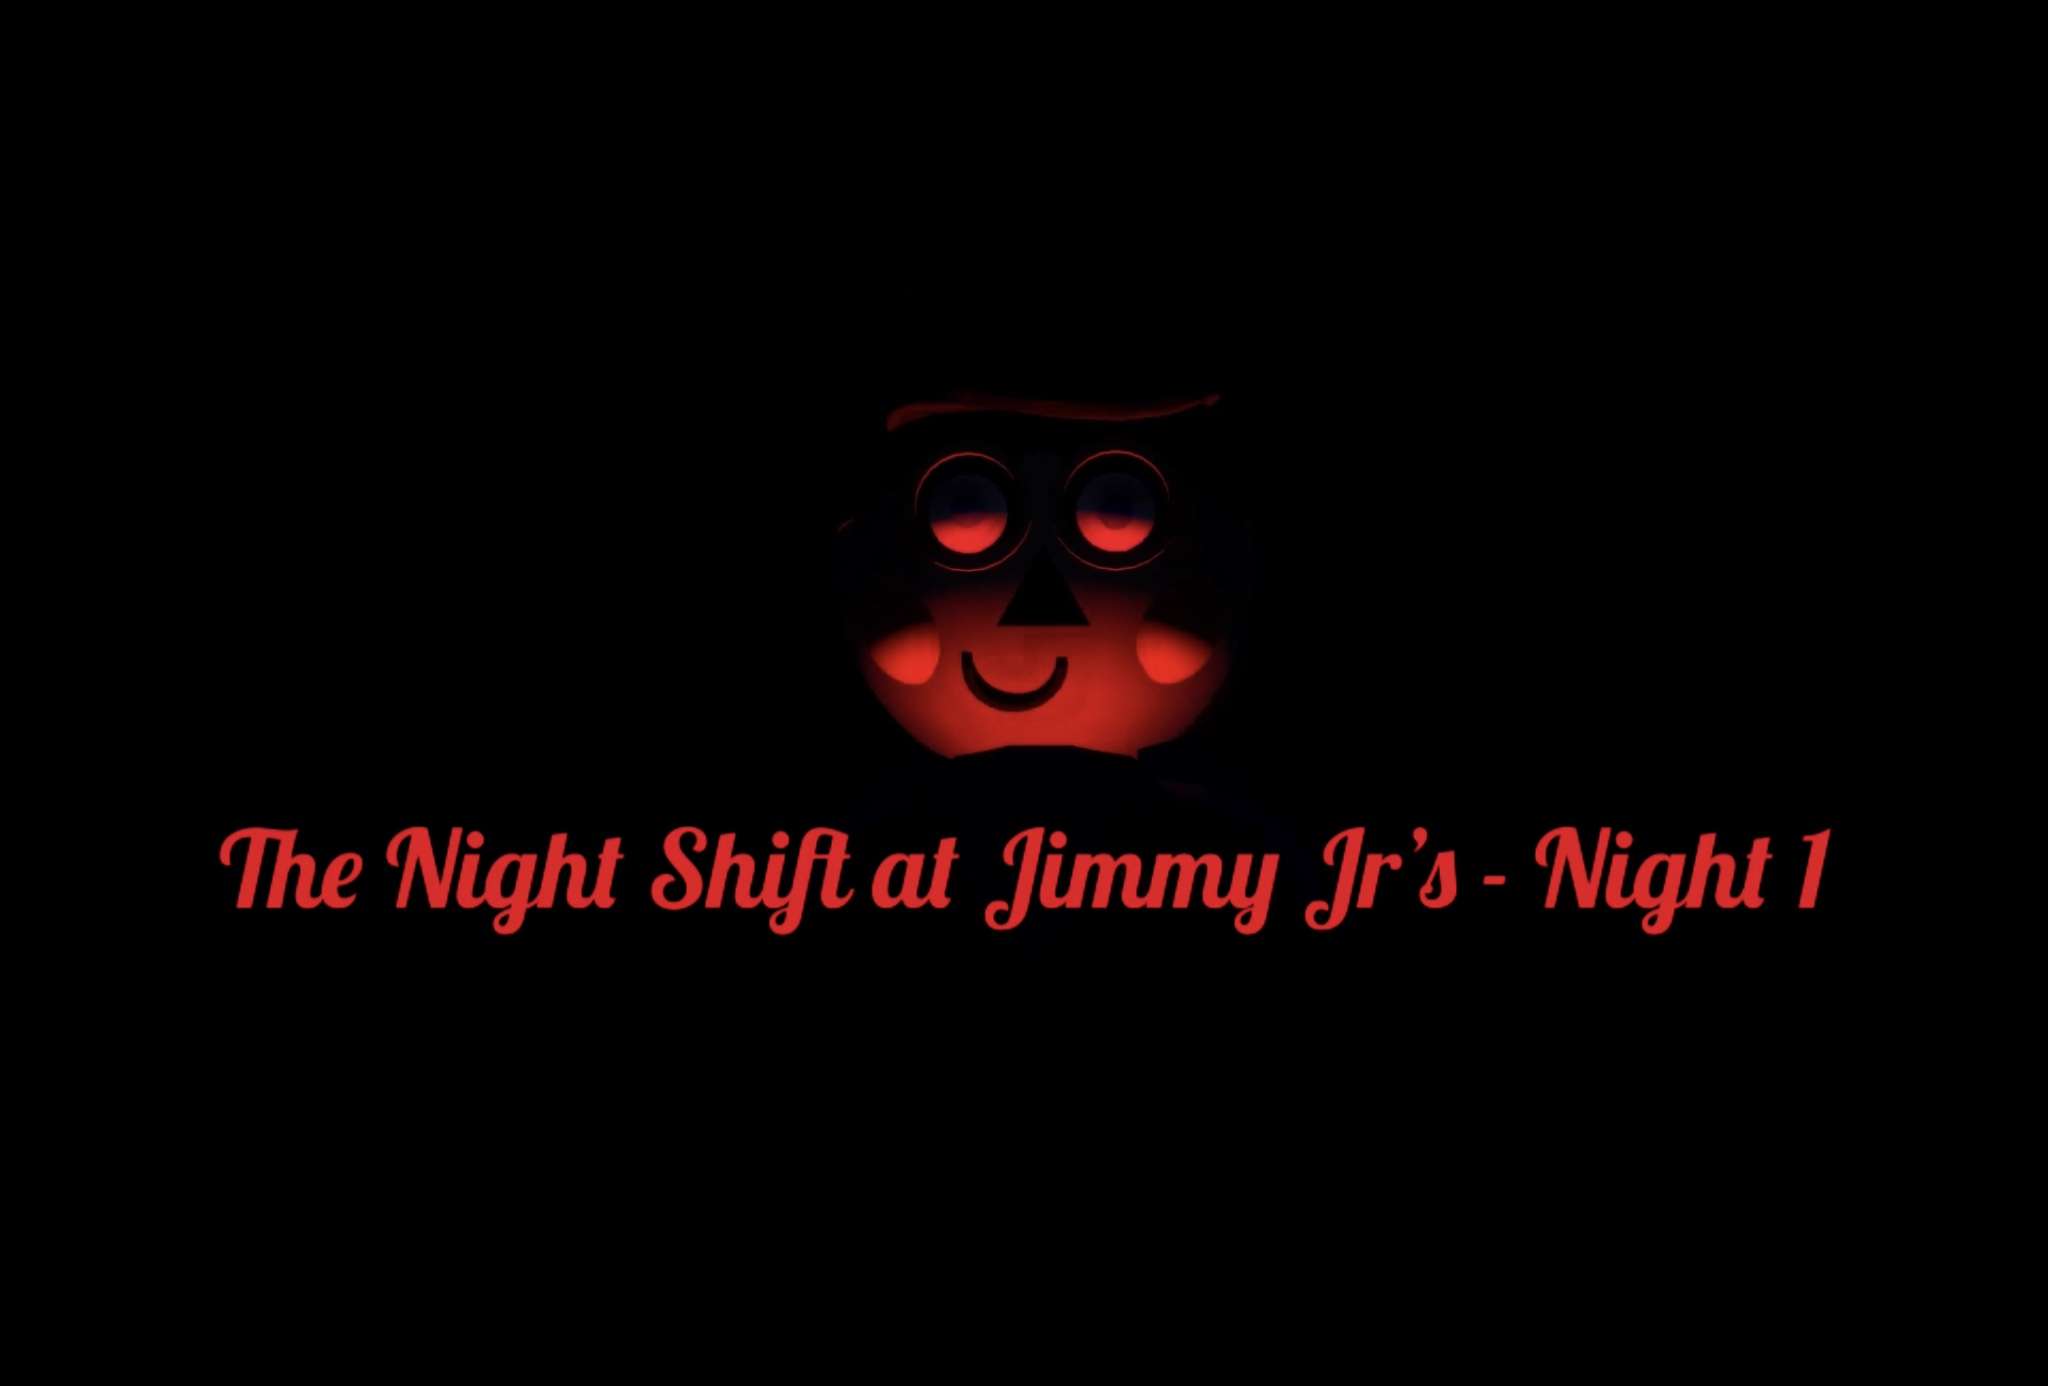 THE NIGHT SHIFT AT JIMMY JR'S - NIGHT 1